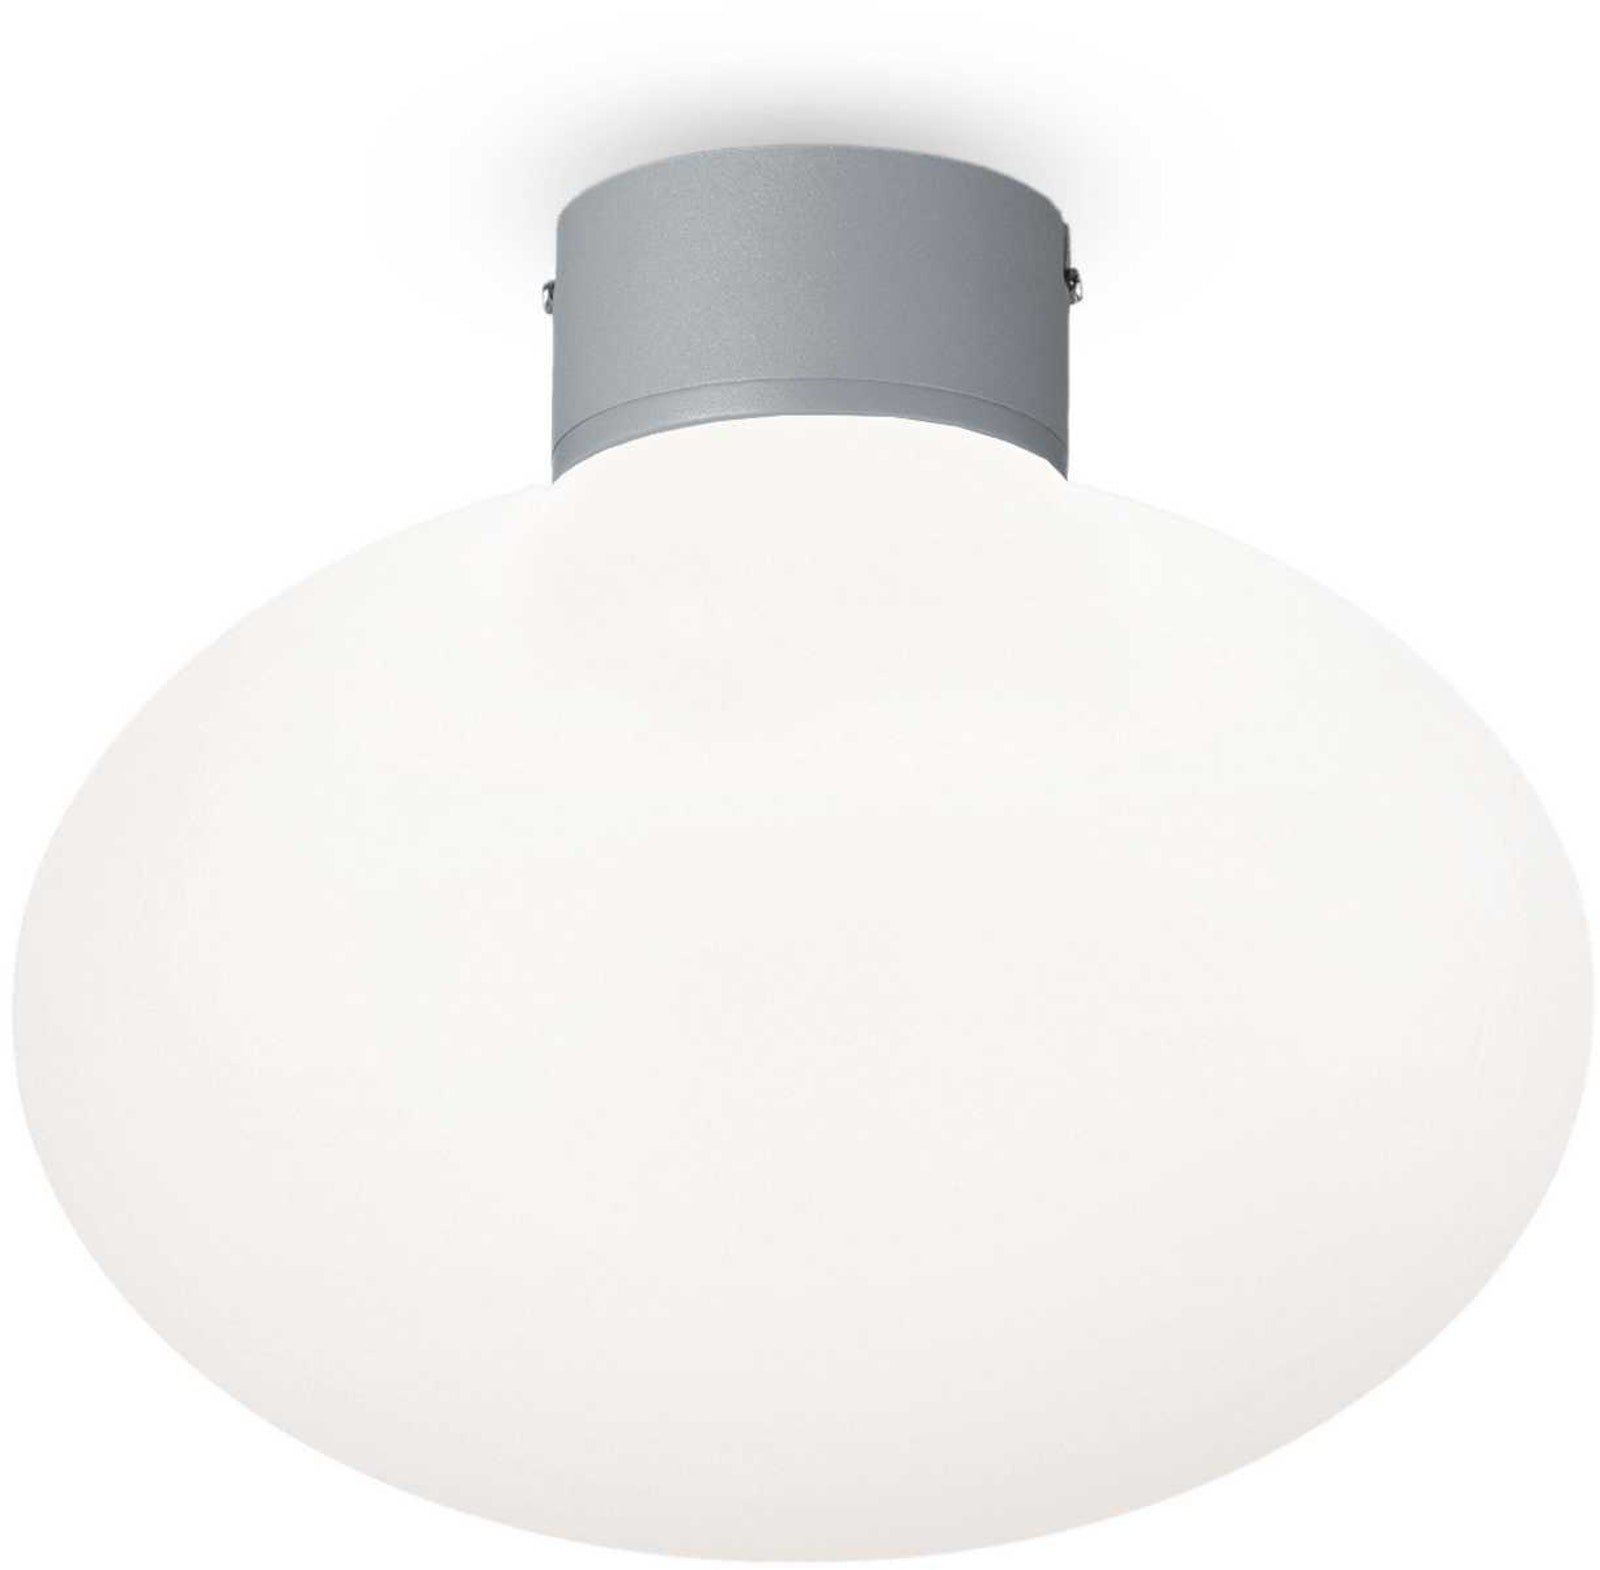 Clio, Udendørs loftslampe, Mpl1, aluminium by Ideal Lux (D: 9 cm. x H: 4 cm., Grå)